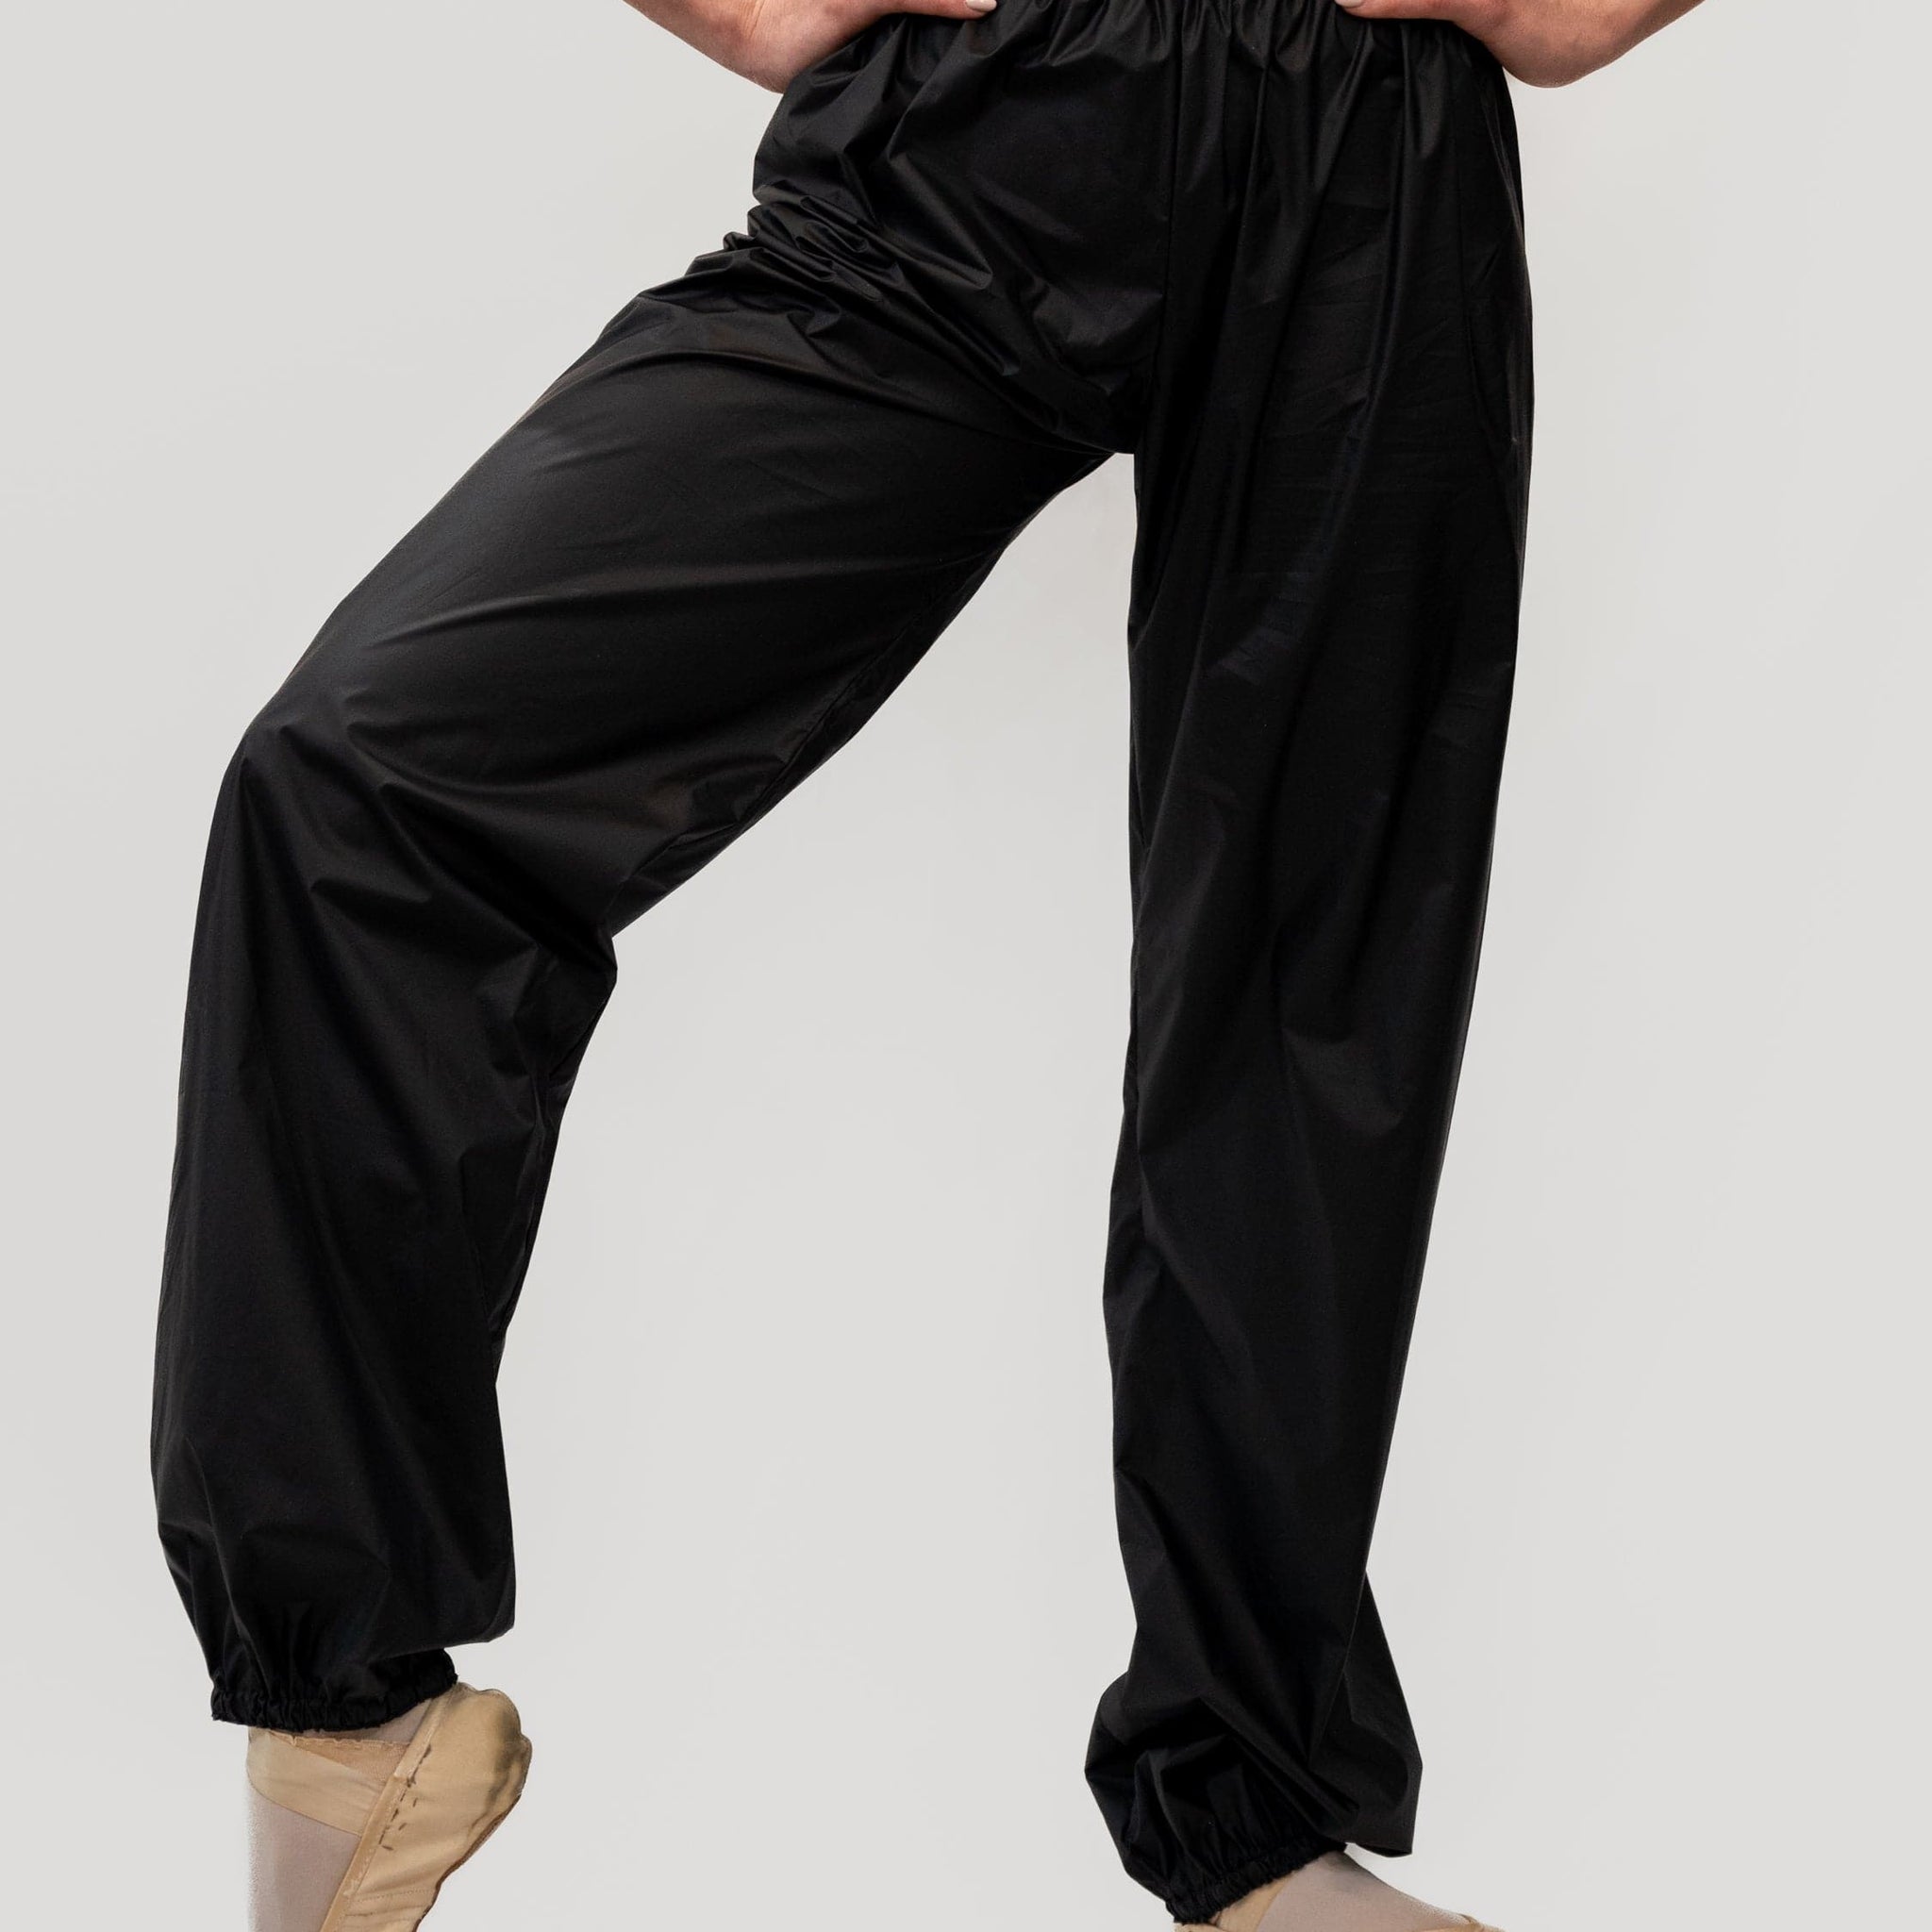 Black Warm-up Dance Trash Bag Pants MP5003 for Women and Men by Atelier della Danza MP